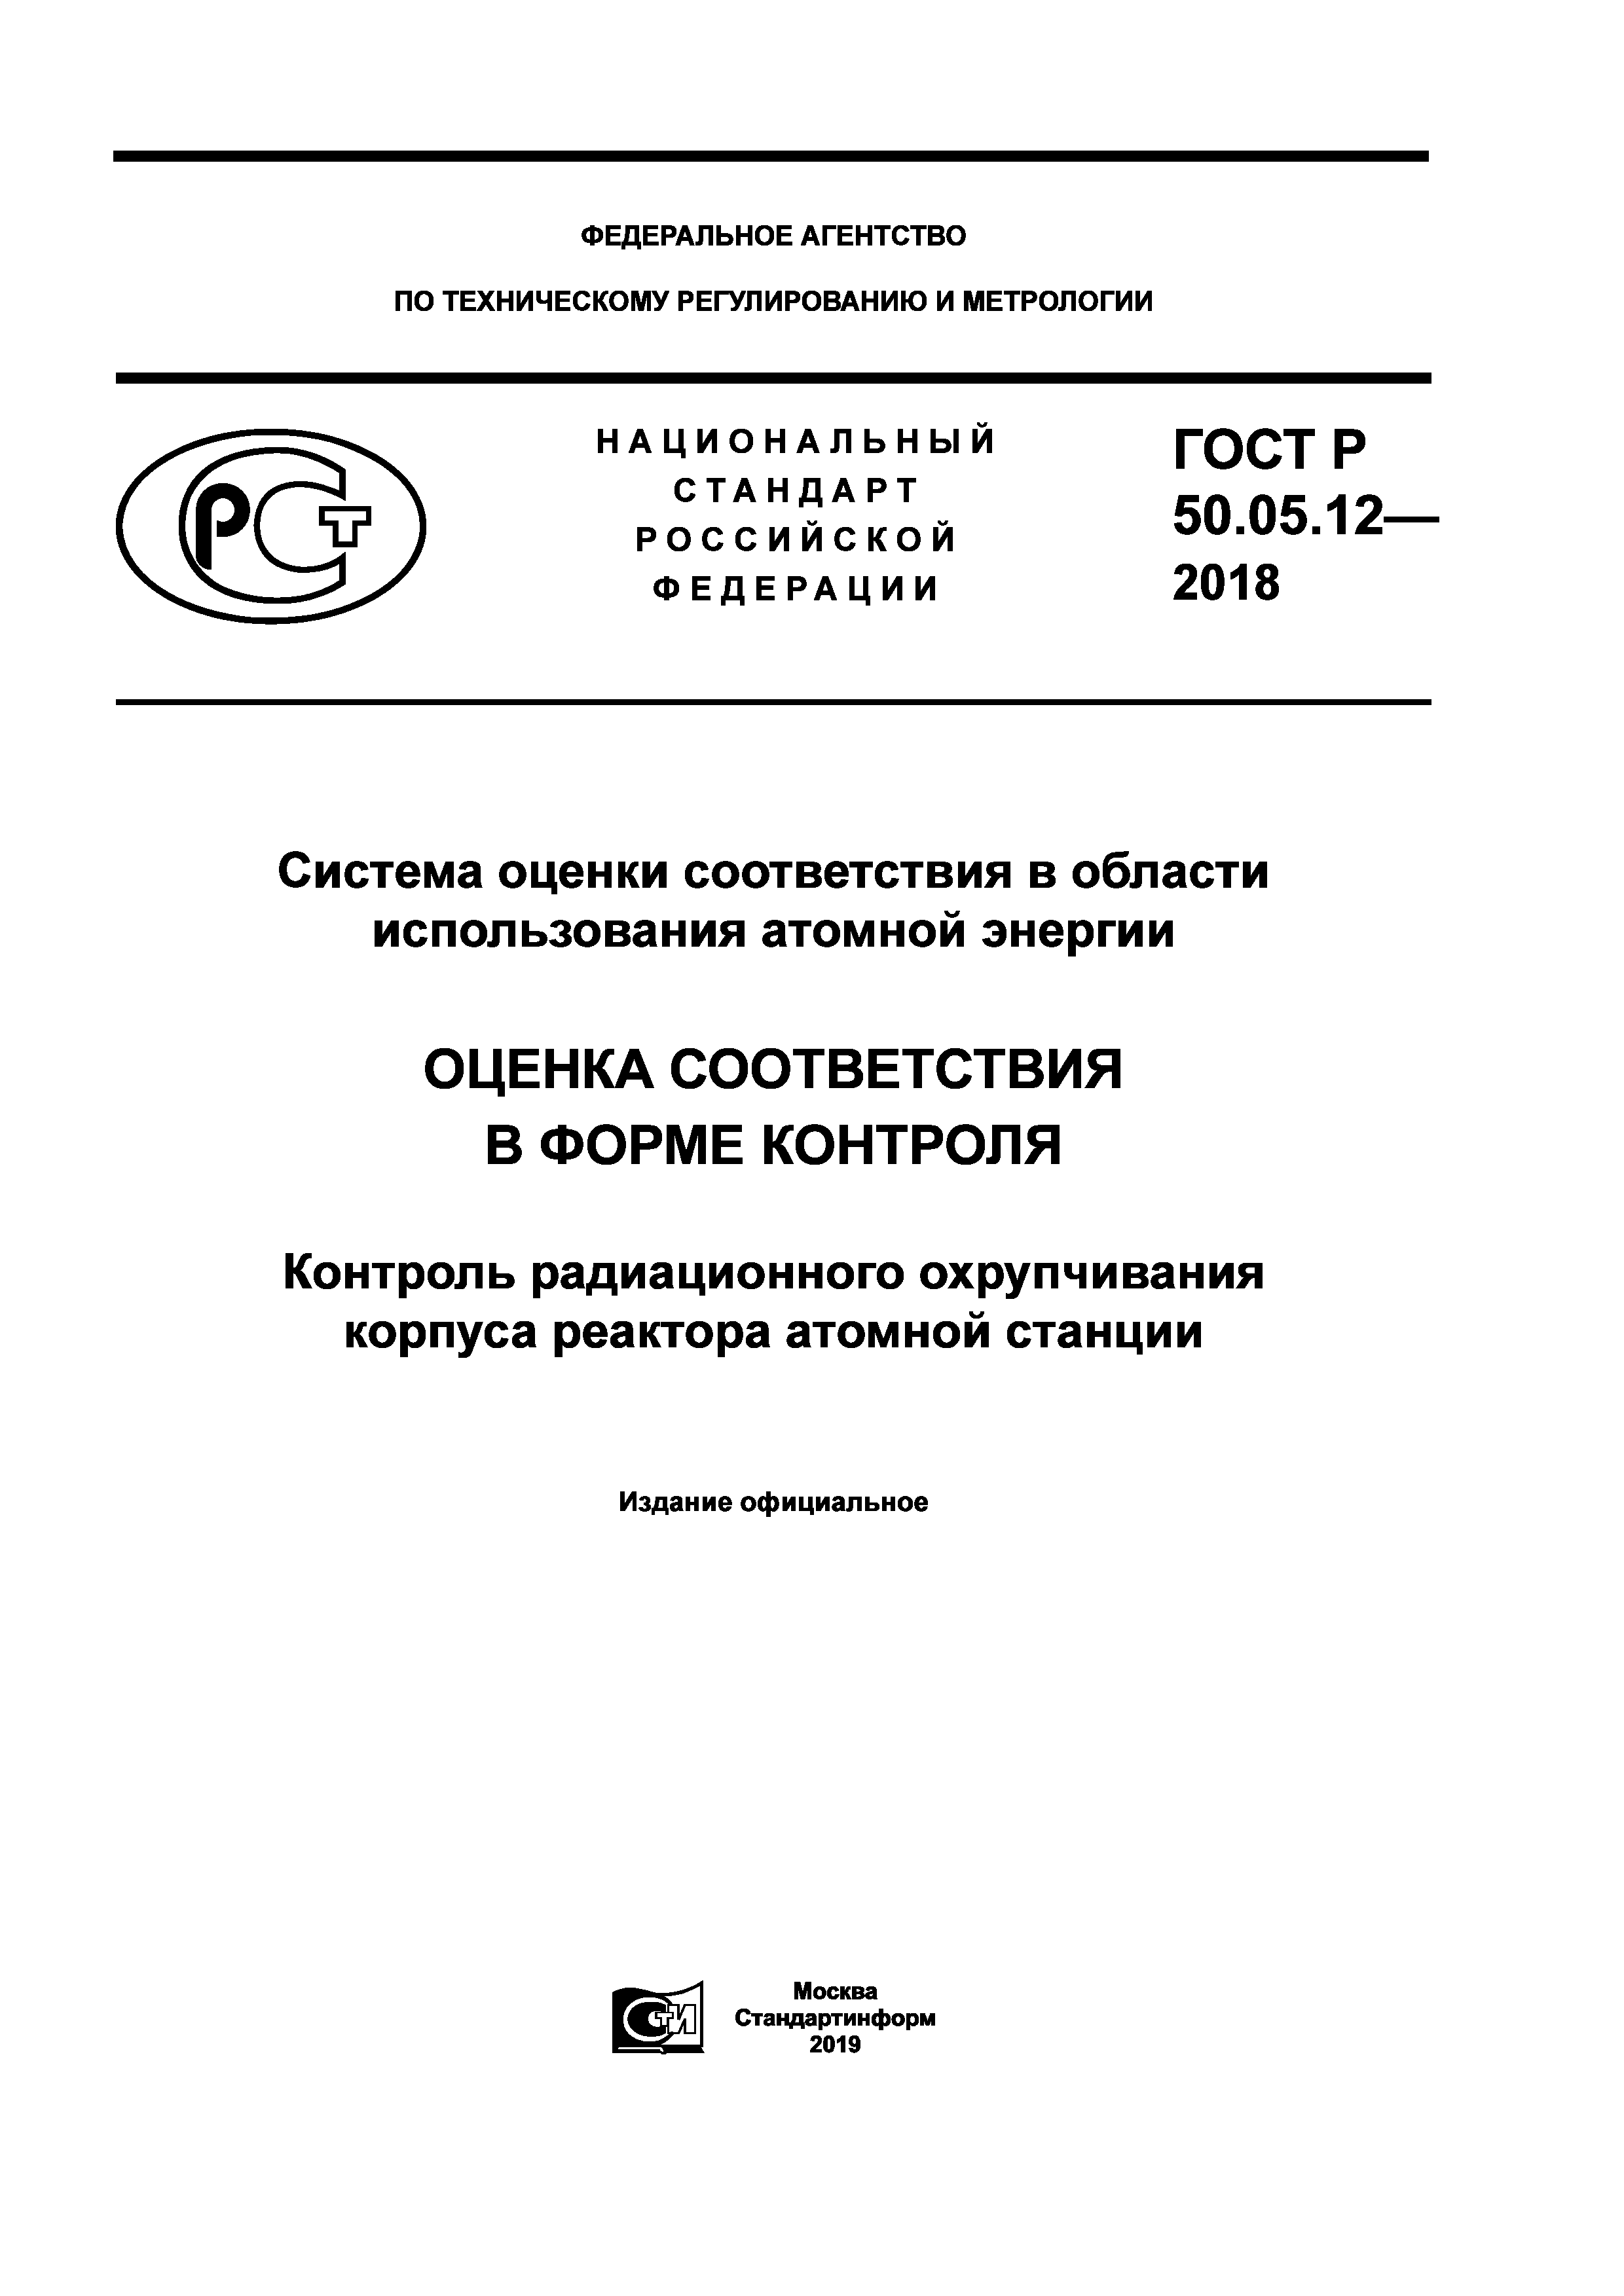 ГОСТ Р 50.05.12-2018